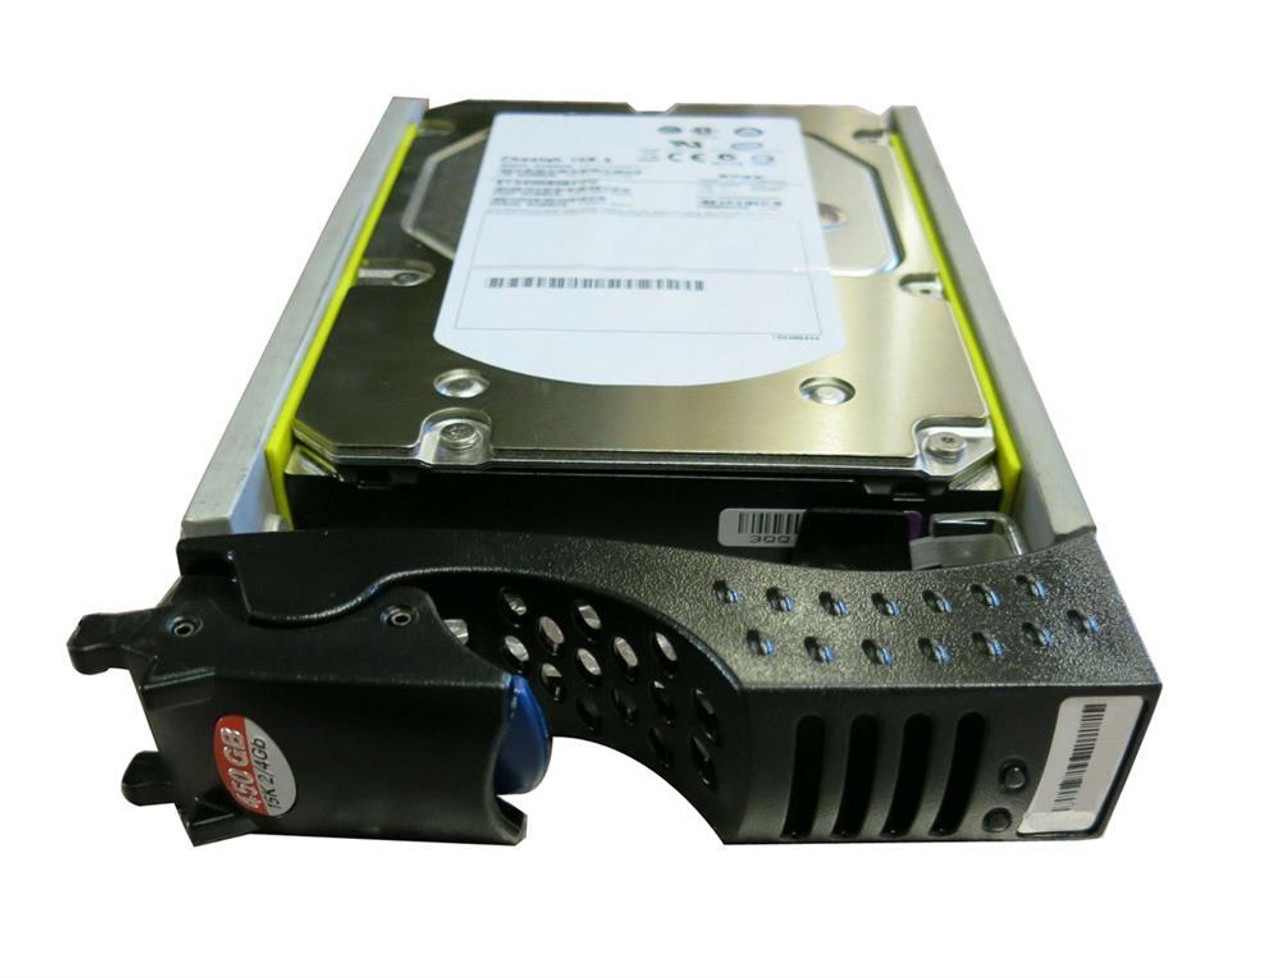 NS-4G15-450TU EMC 450GB 15000RPM Fibre Channel 4Gbps 3.5-inch Internal Hard Drive Upgrade